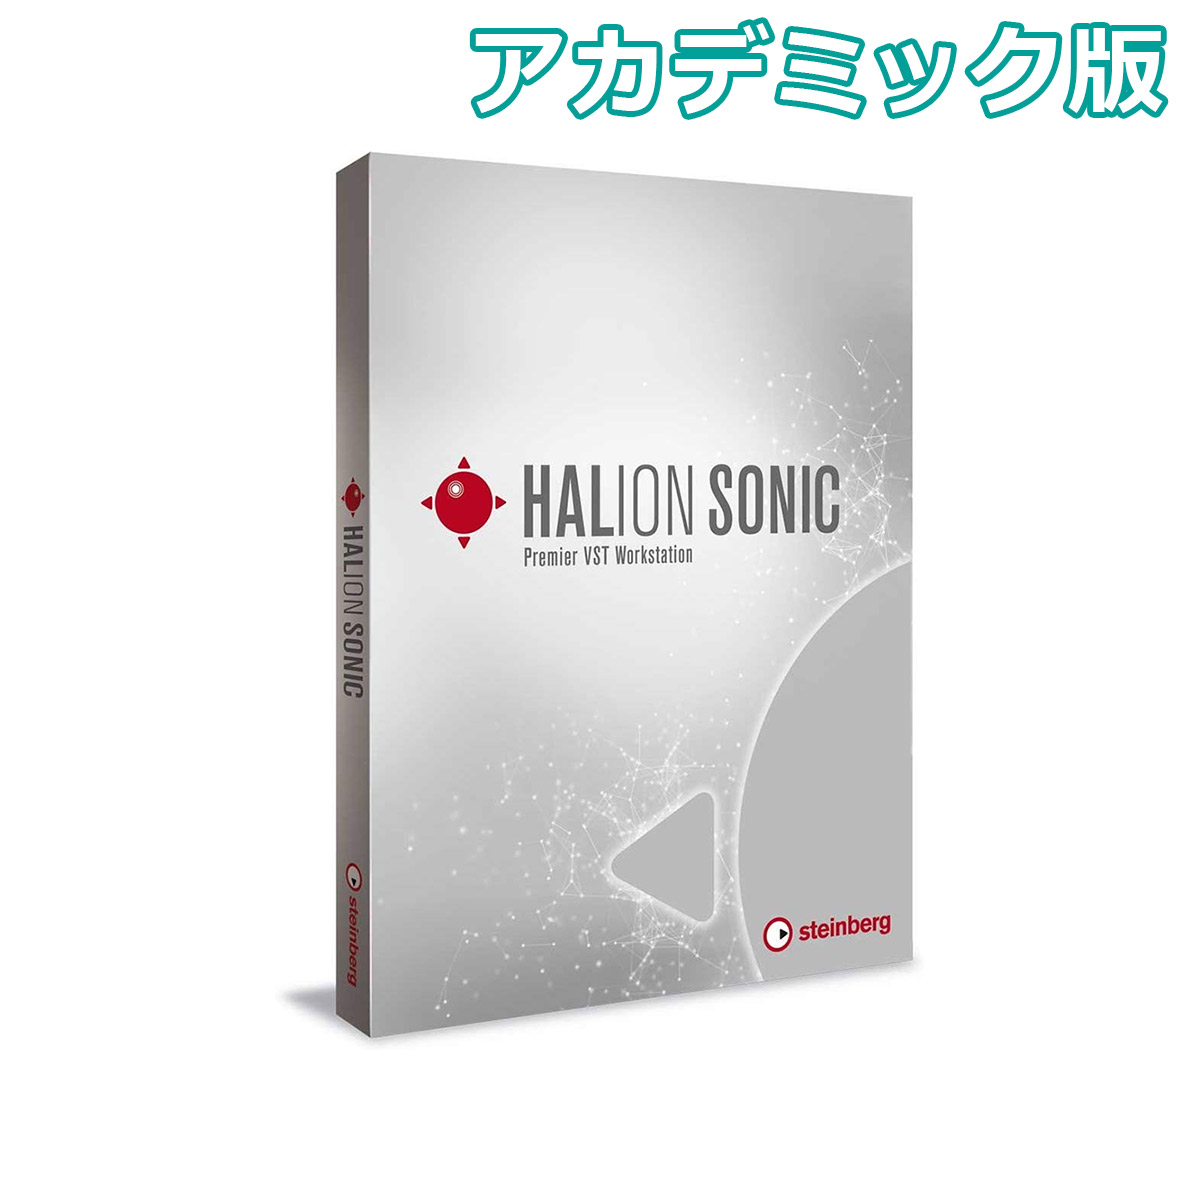 steinberg HALion Sonic 品質のいい スタインバーグ プラグインソフト アカデミック版 激安先着